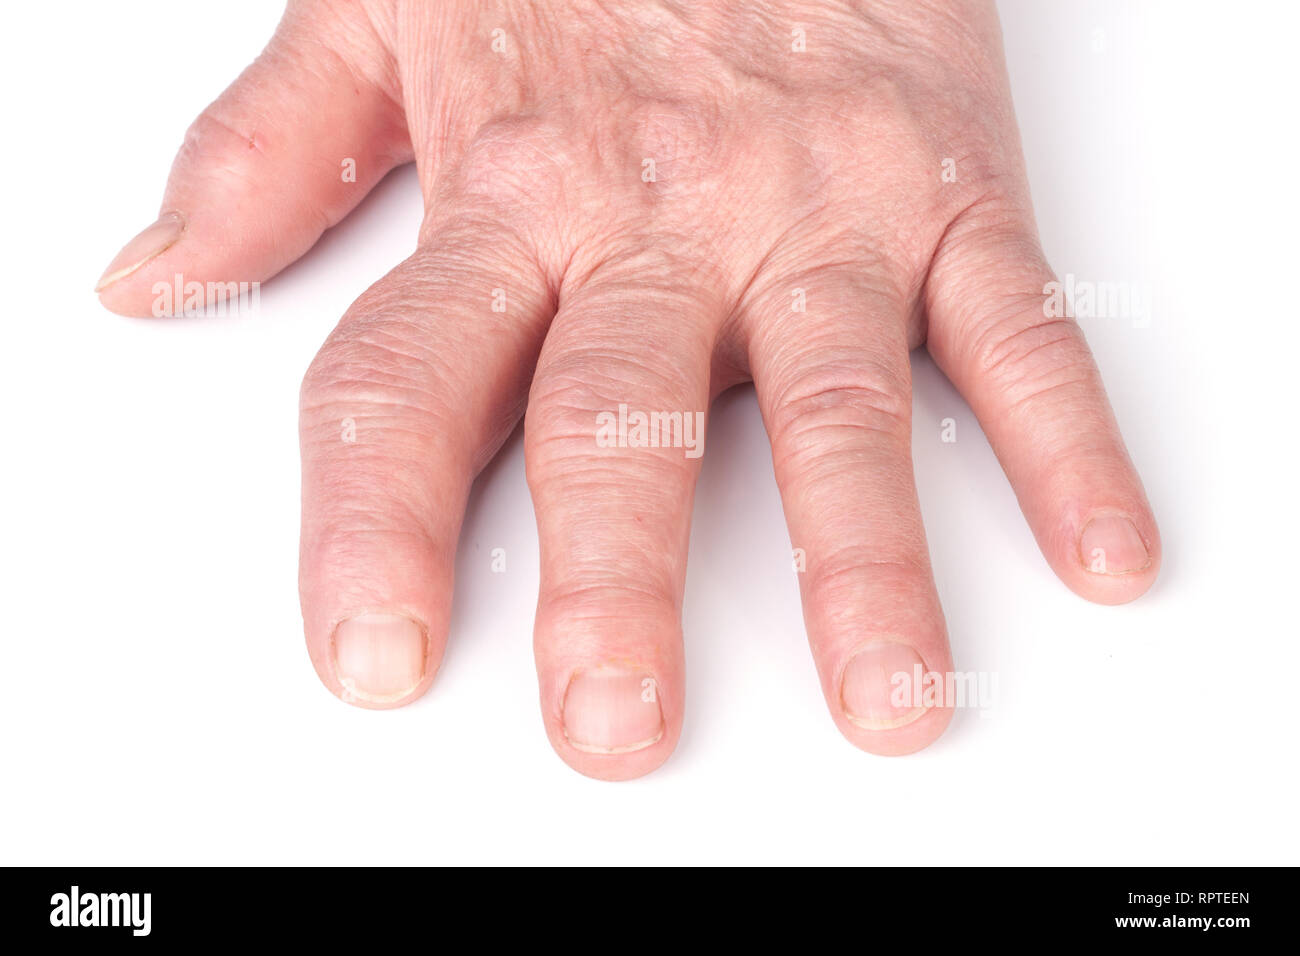 Rheumatoid polyarthritis of hands isolated on white background Stock Photo